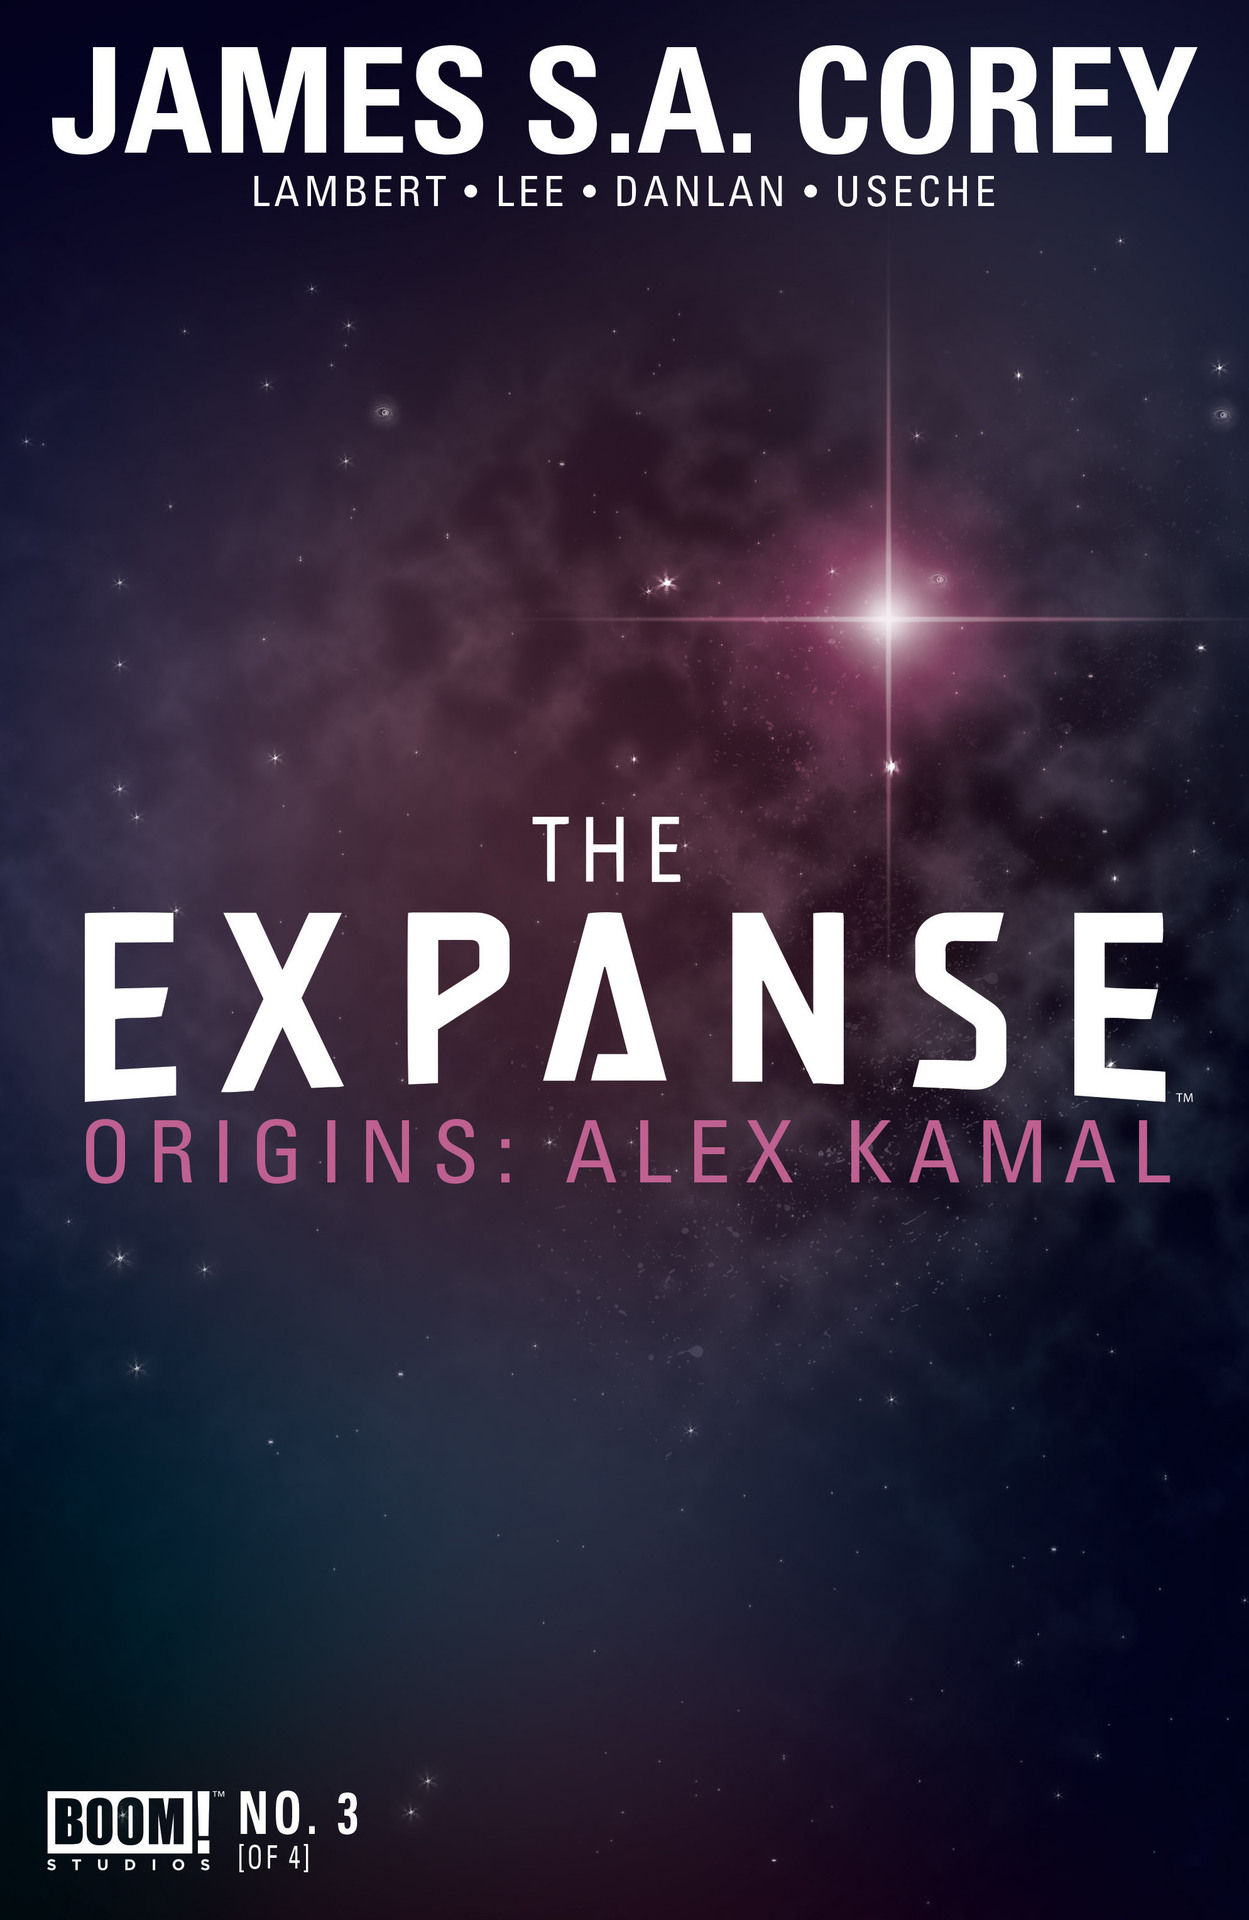 The Expanse Origins #3: Alex Kamal